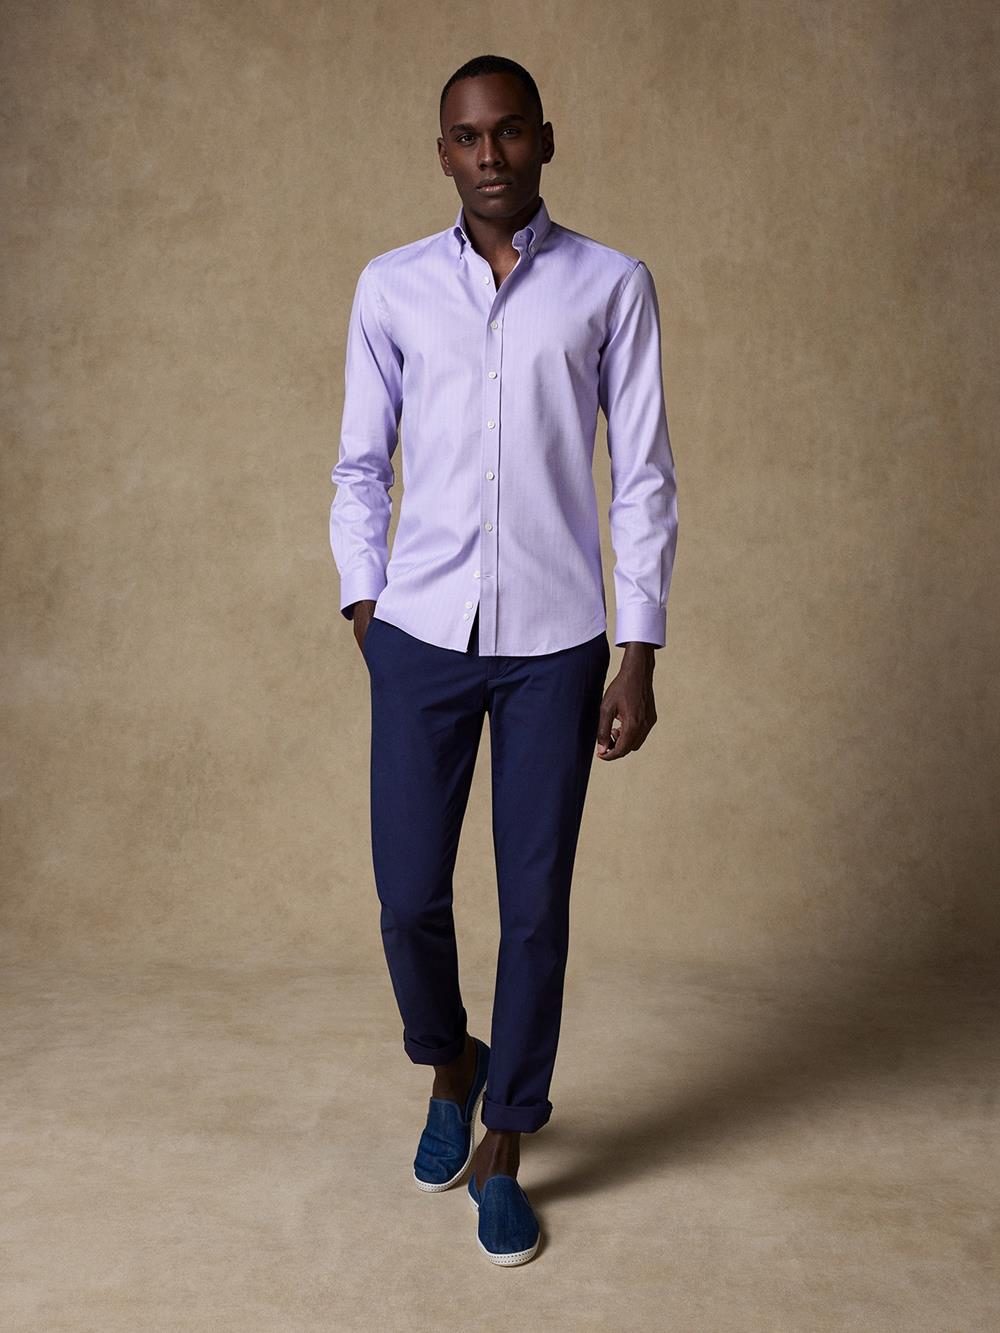 Camisa slim fit violeta de espiga - Con botonos